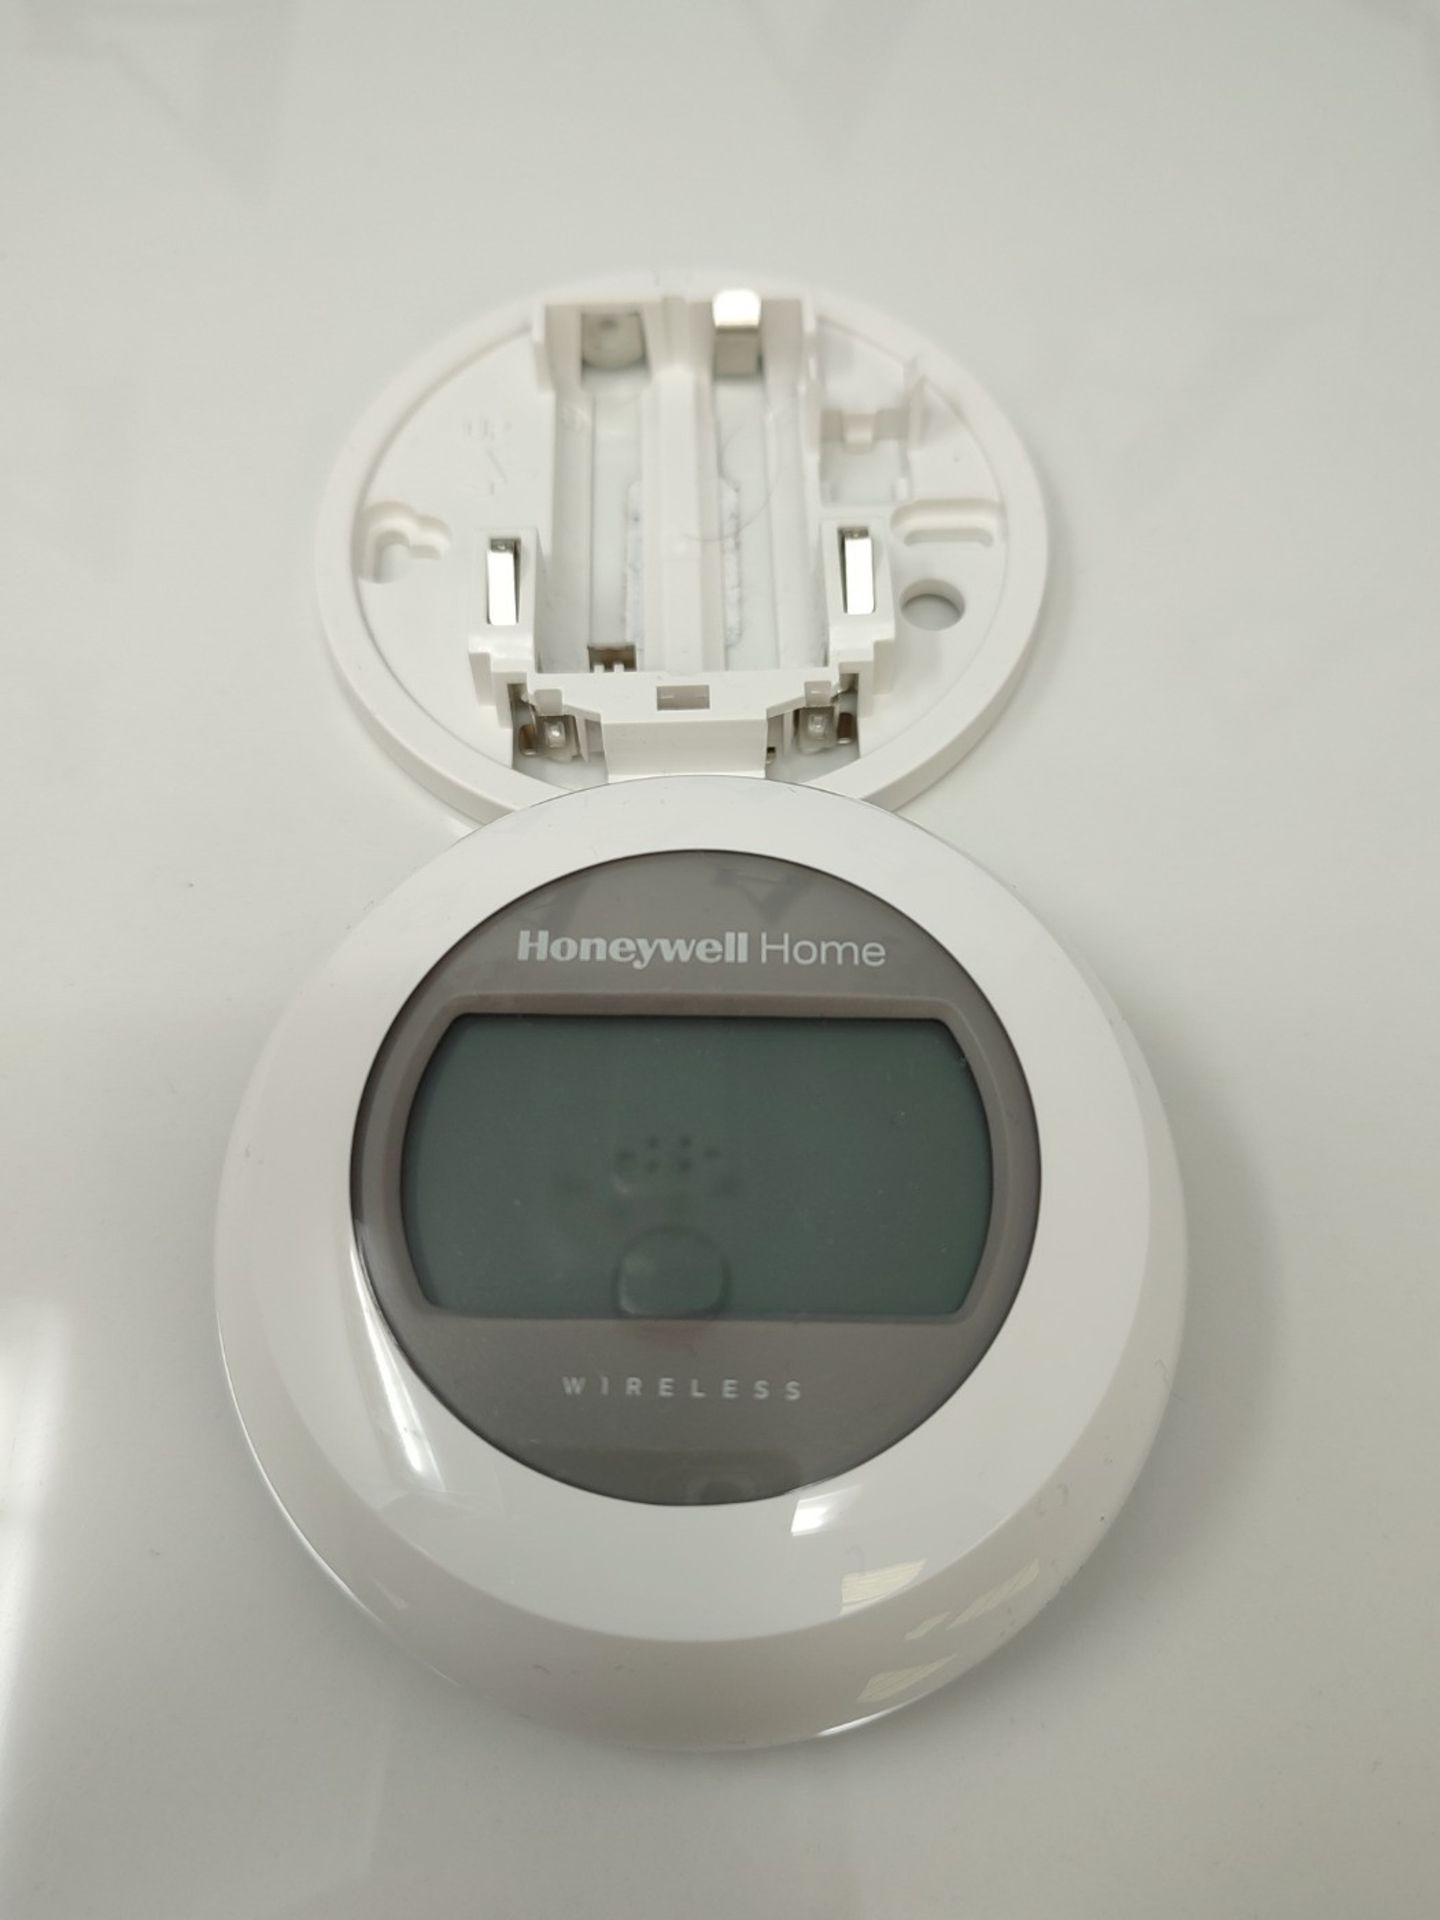 RRP £81.00 Honeywell Home evohome radio thermostat, T87RF2059, works with Amazon Alexa. - Image 3 of 3